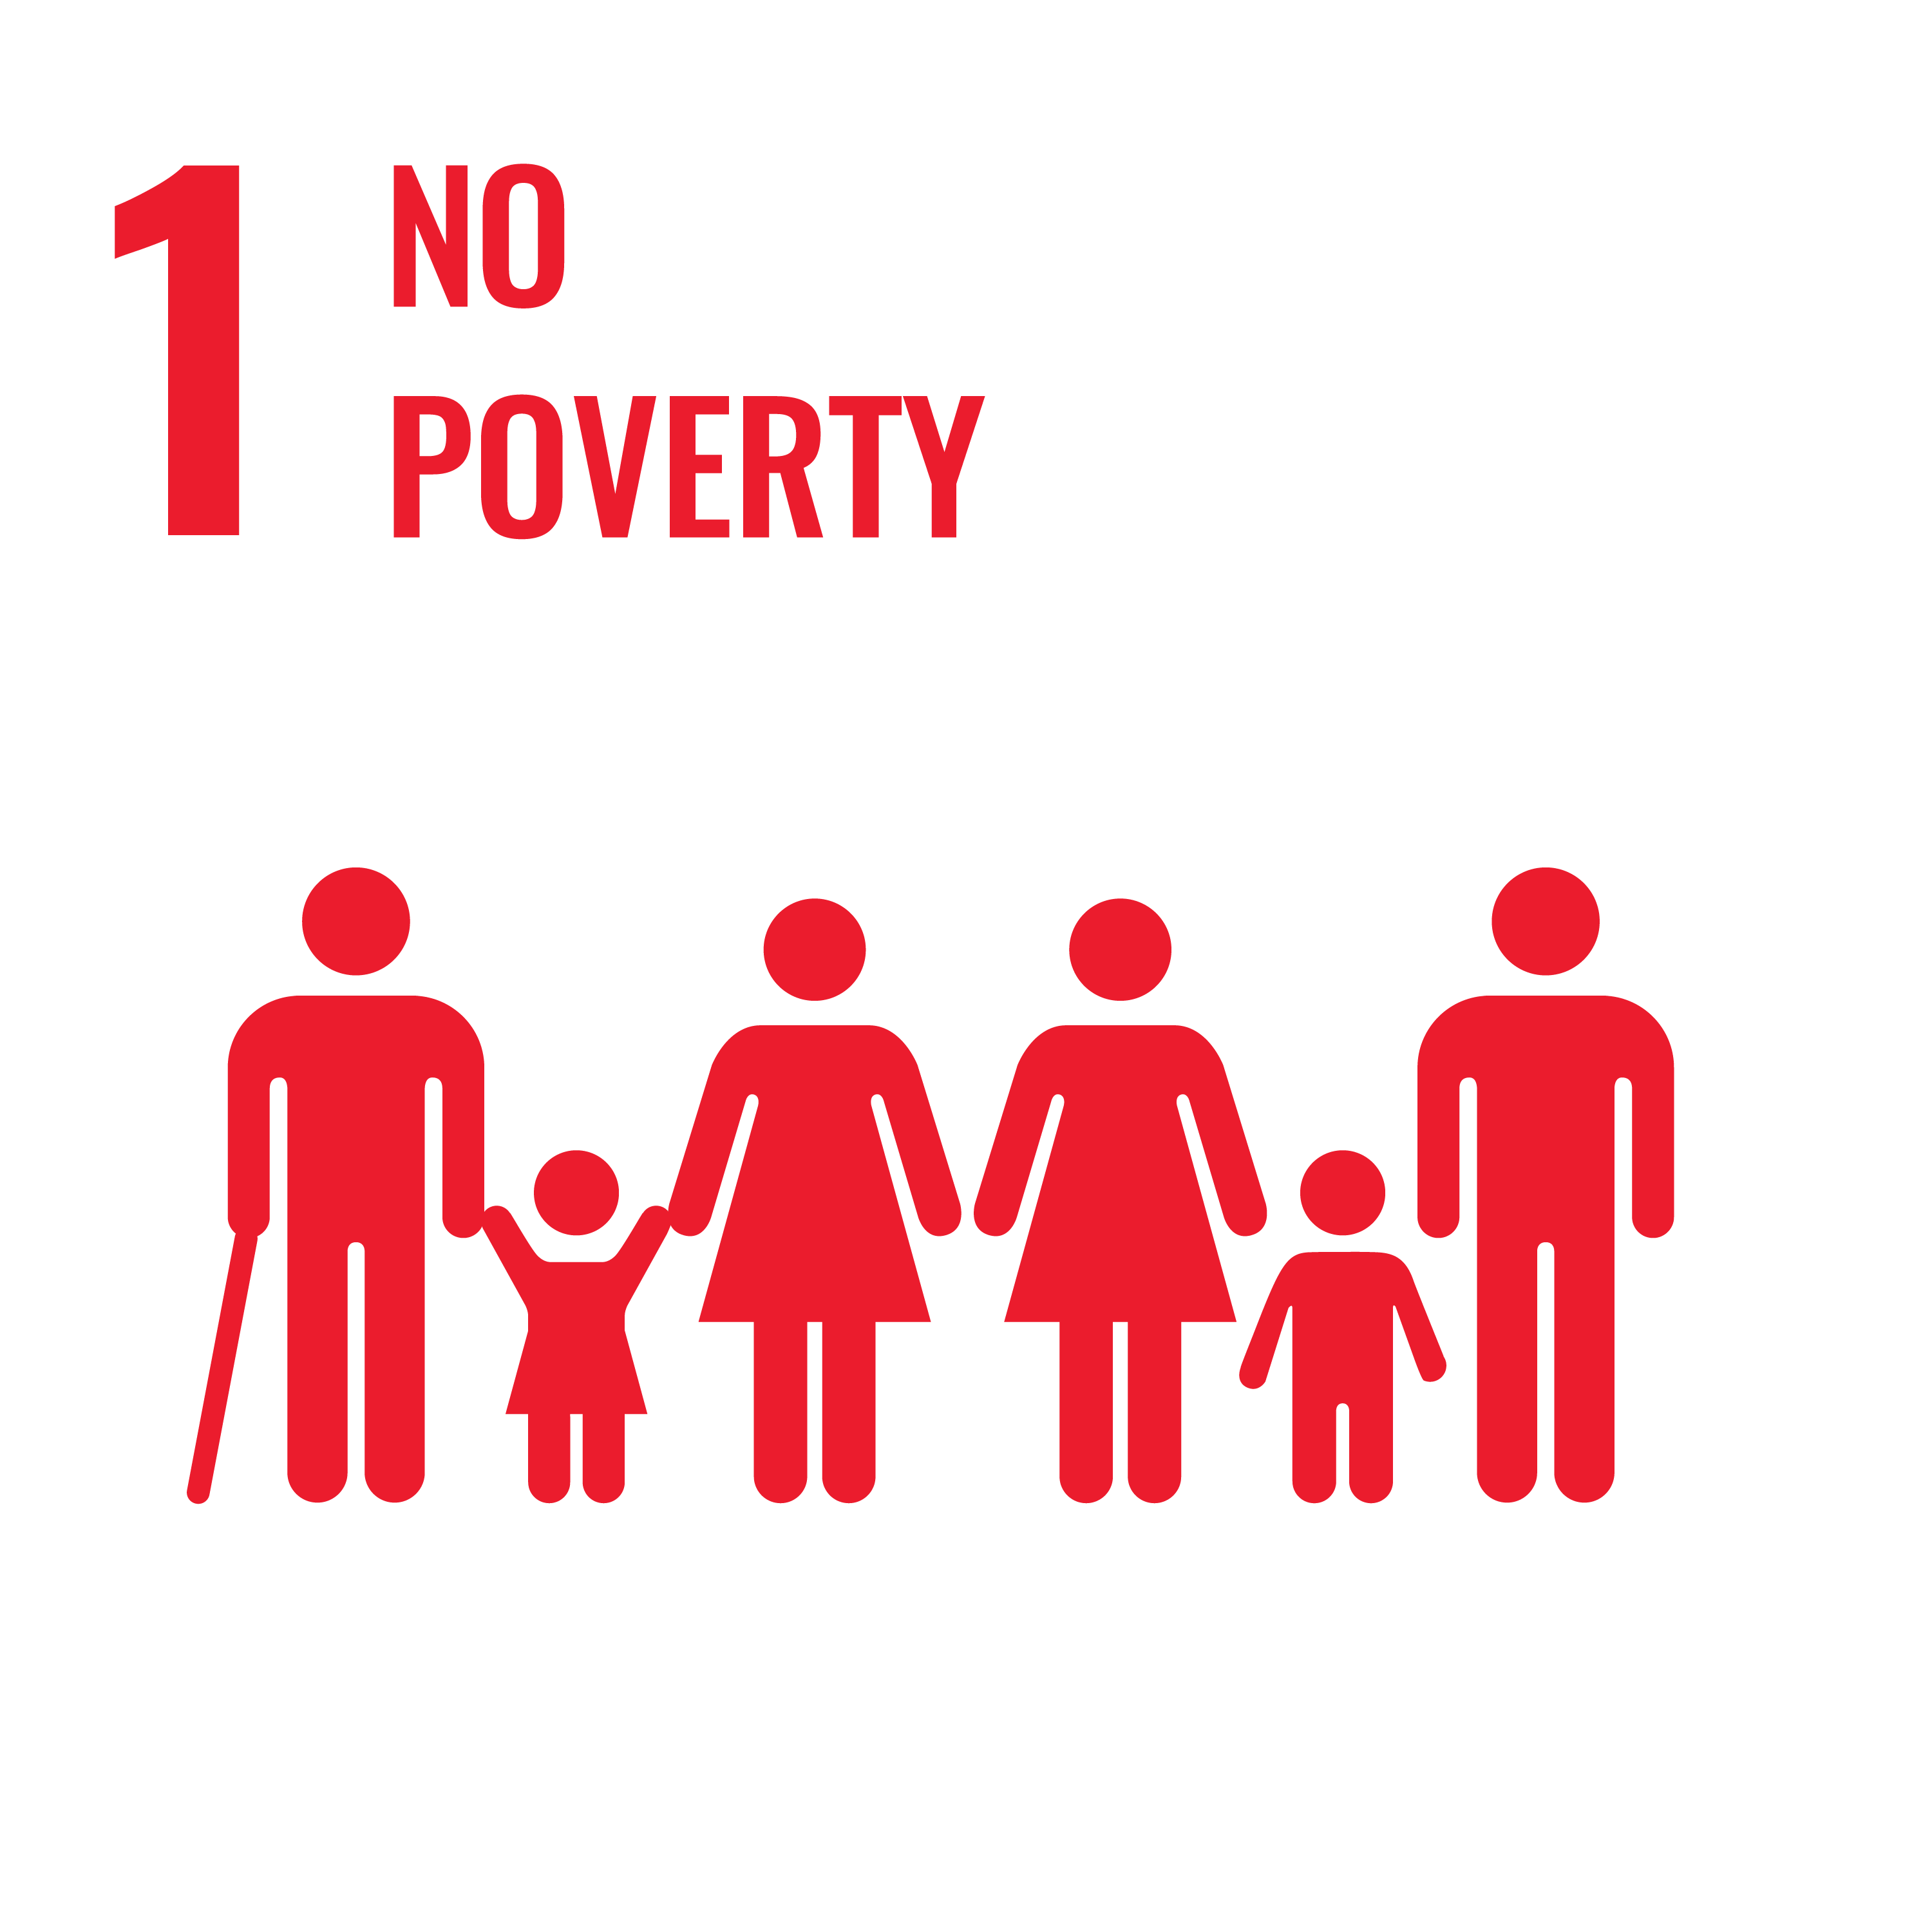 UN Sustainable Development Goals 1 - No Poverty